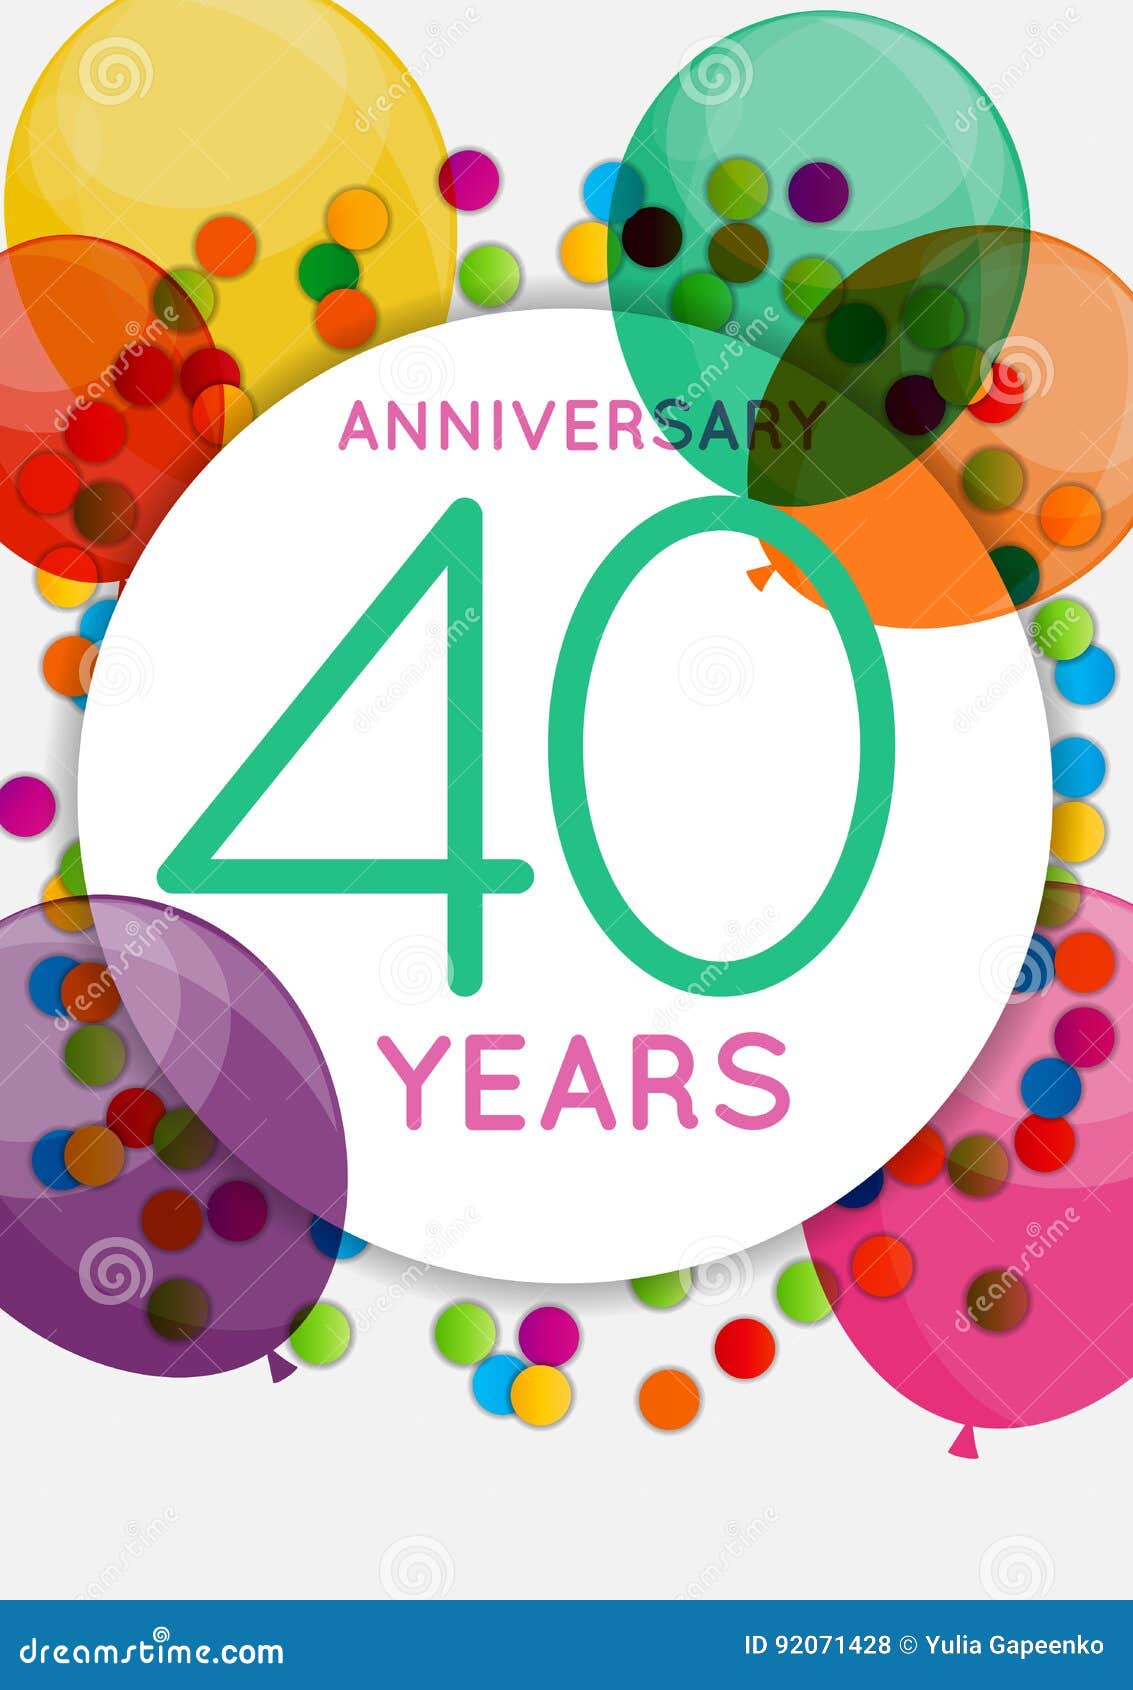 Template 40 Years Anniversary Congratulations Greeting Card Invitation Vector Illustration Stock Vector Illustration Of Badge Label